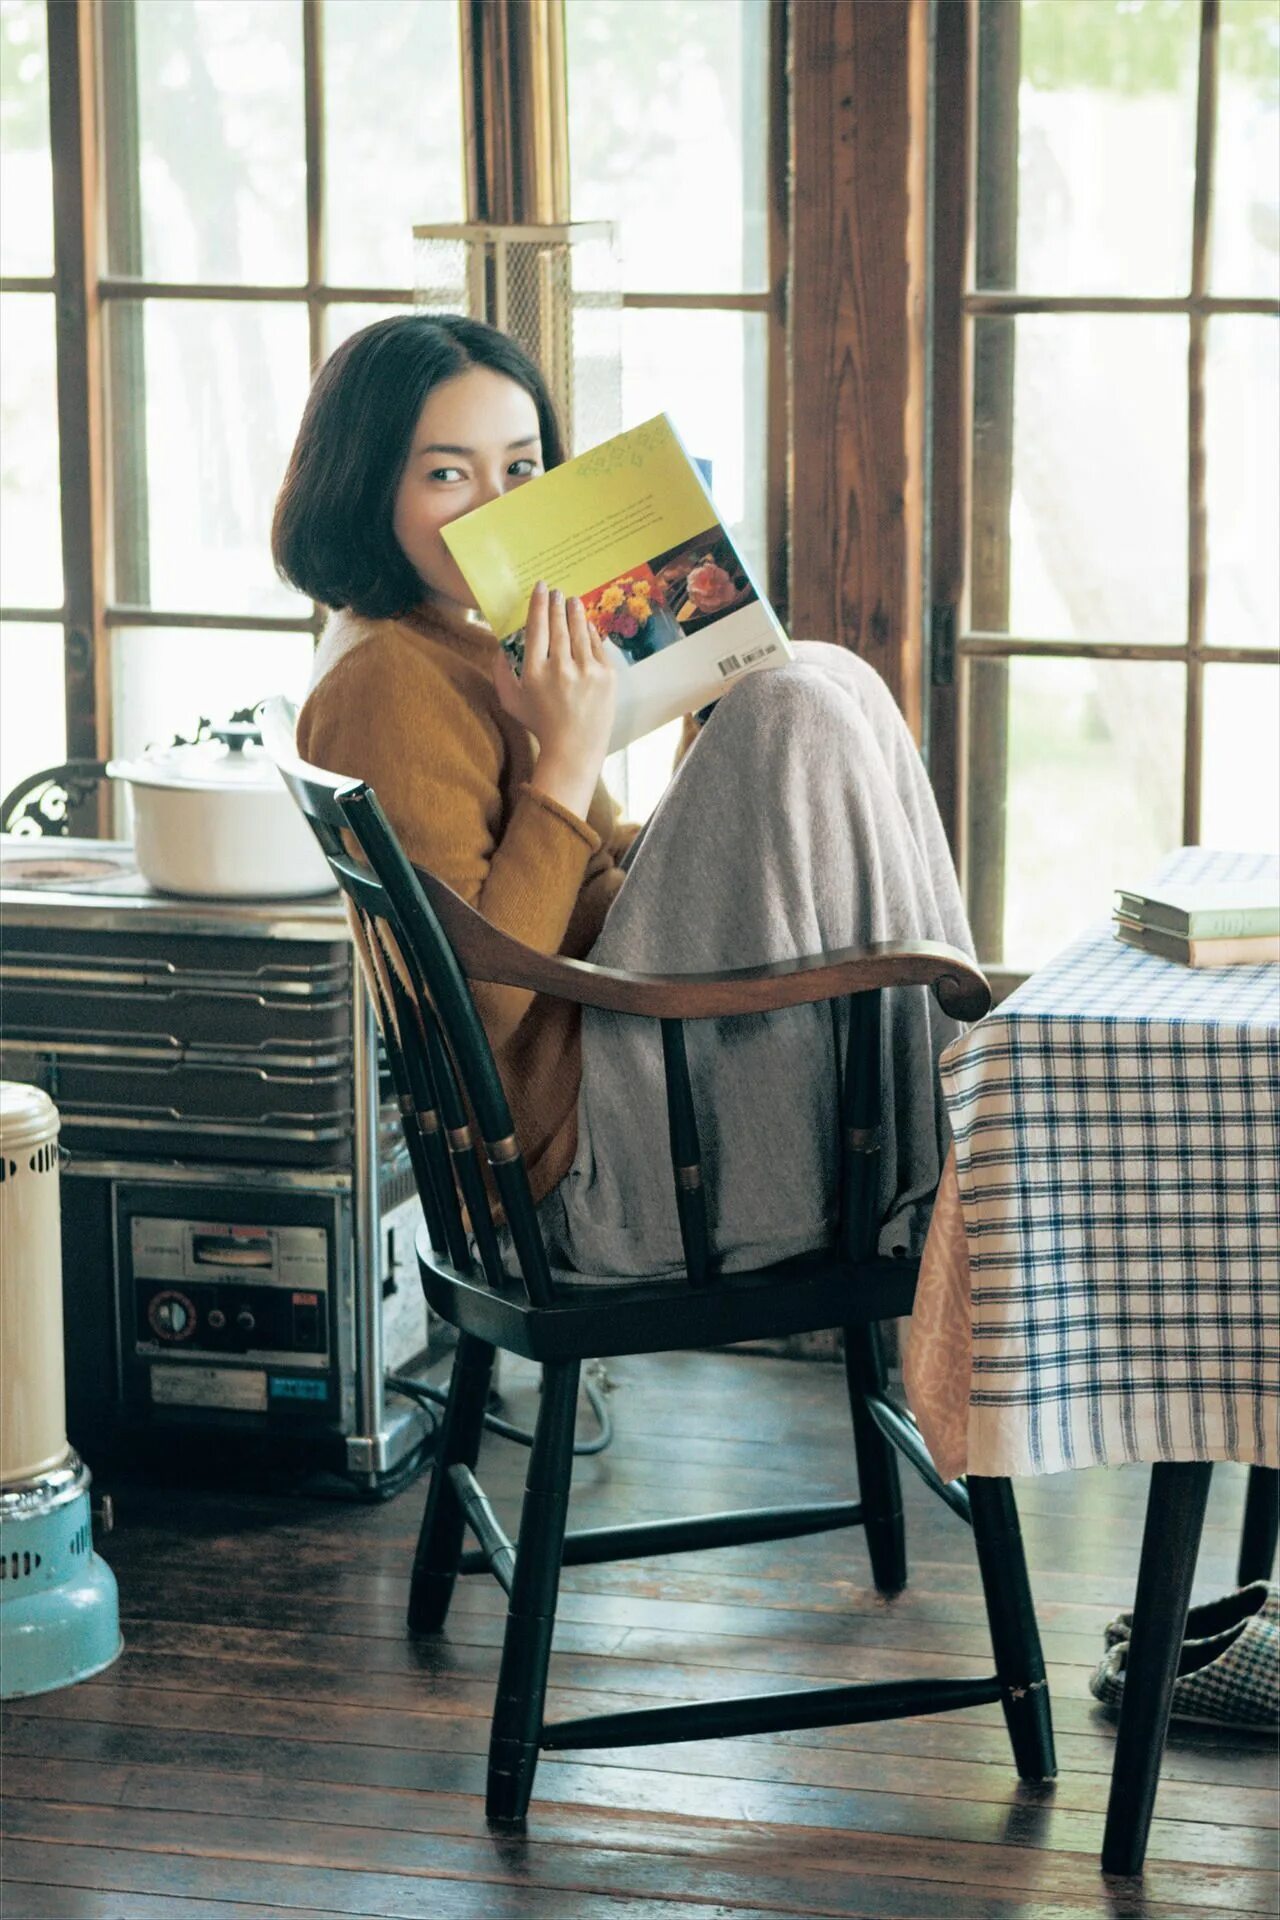 She reads magazines. Девушка читает журнал. Девушка читает дневник. Девушка читает Бродского. Девочка читает журнал.